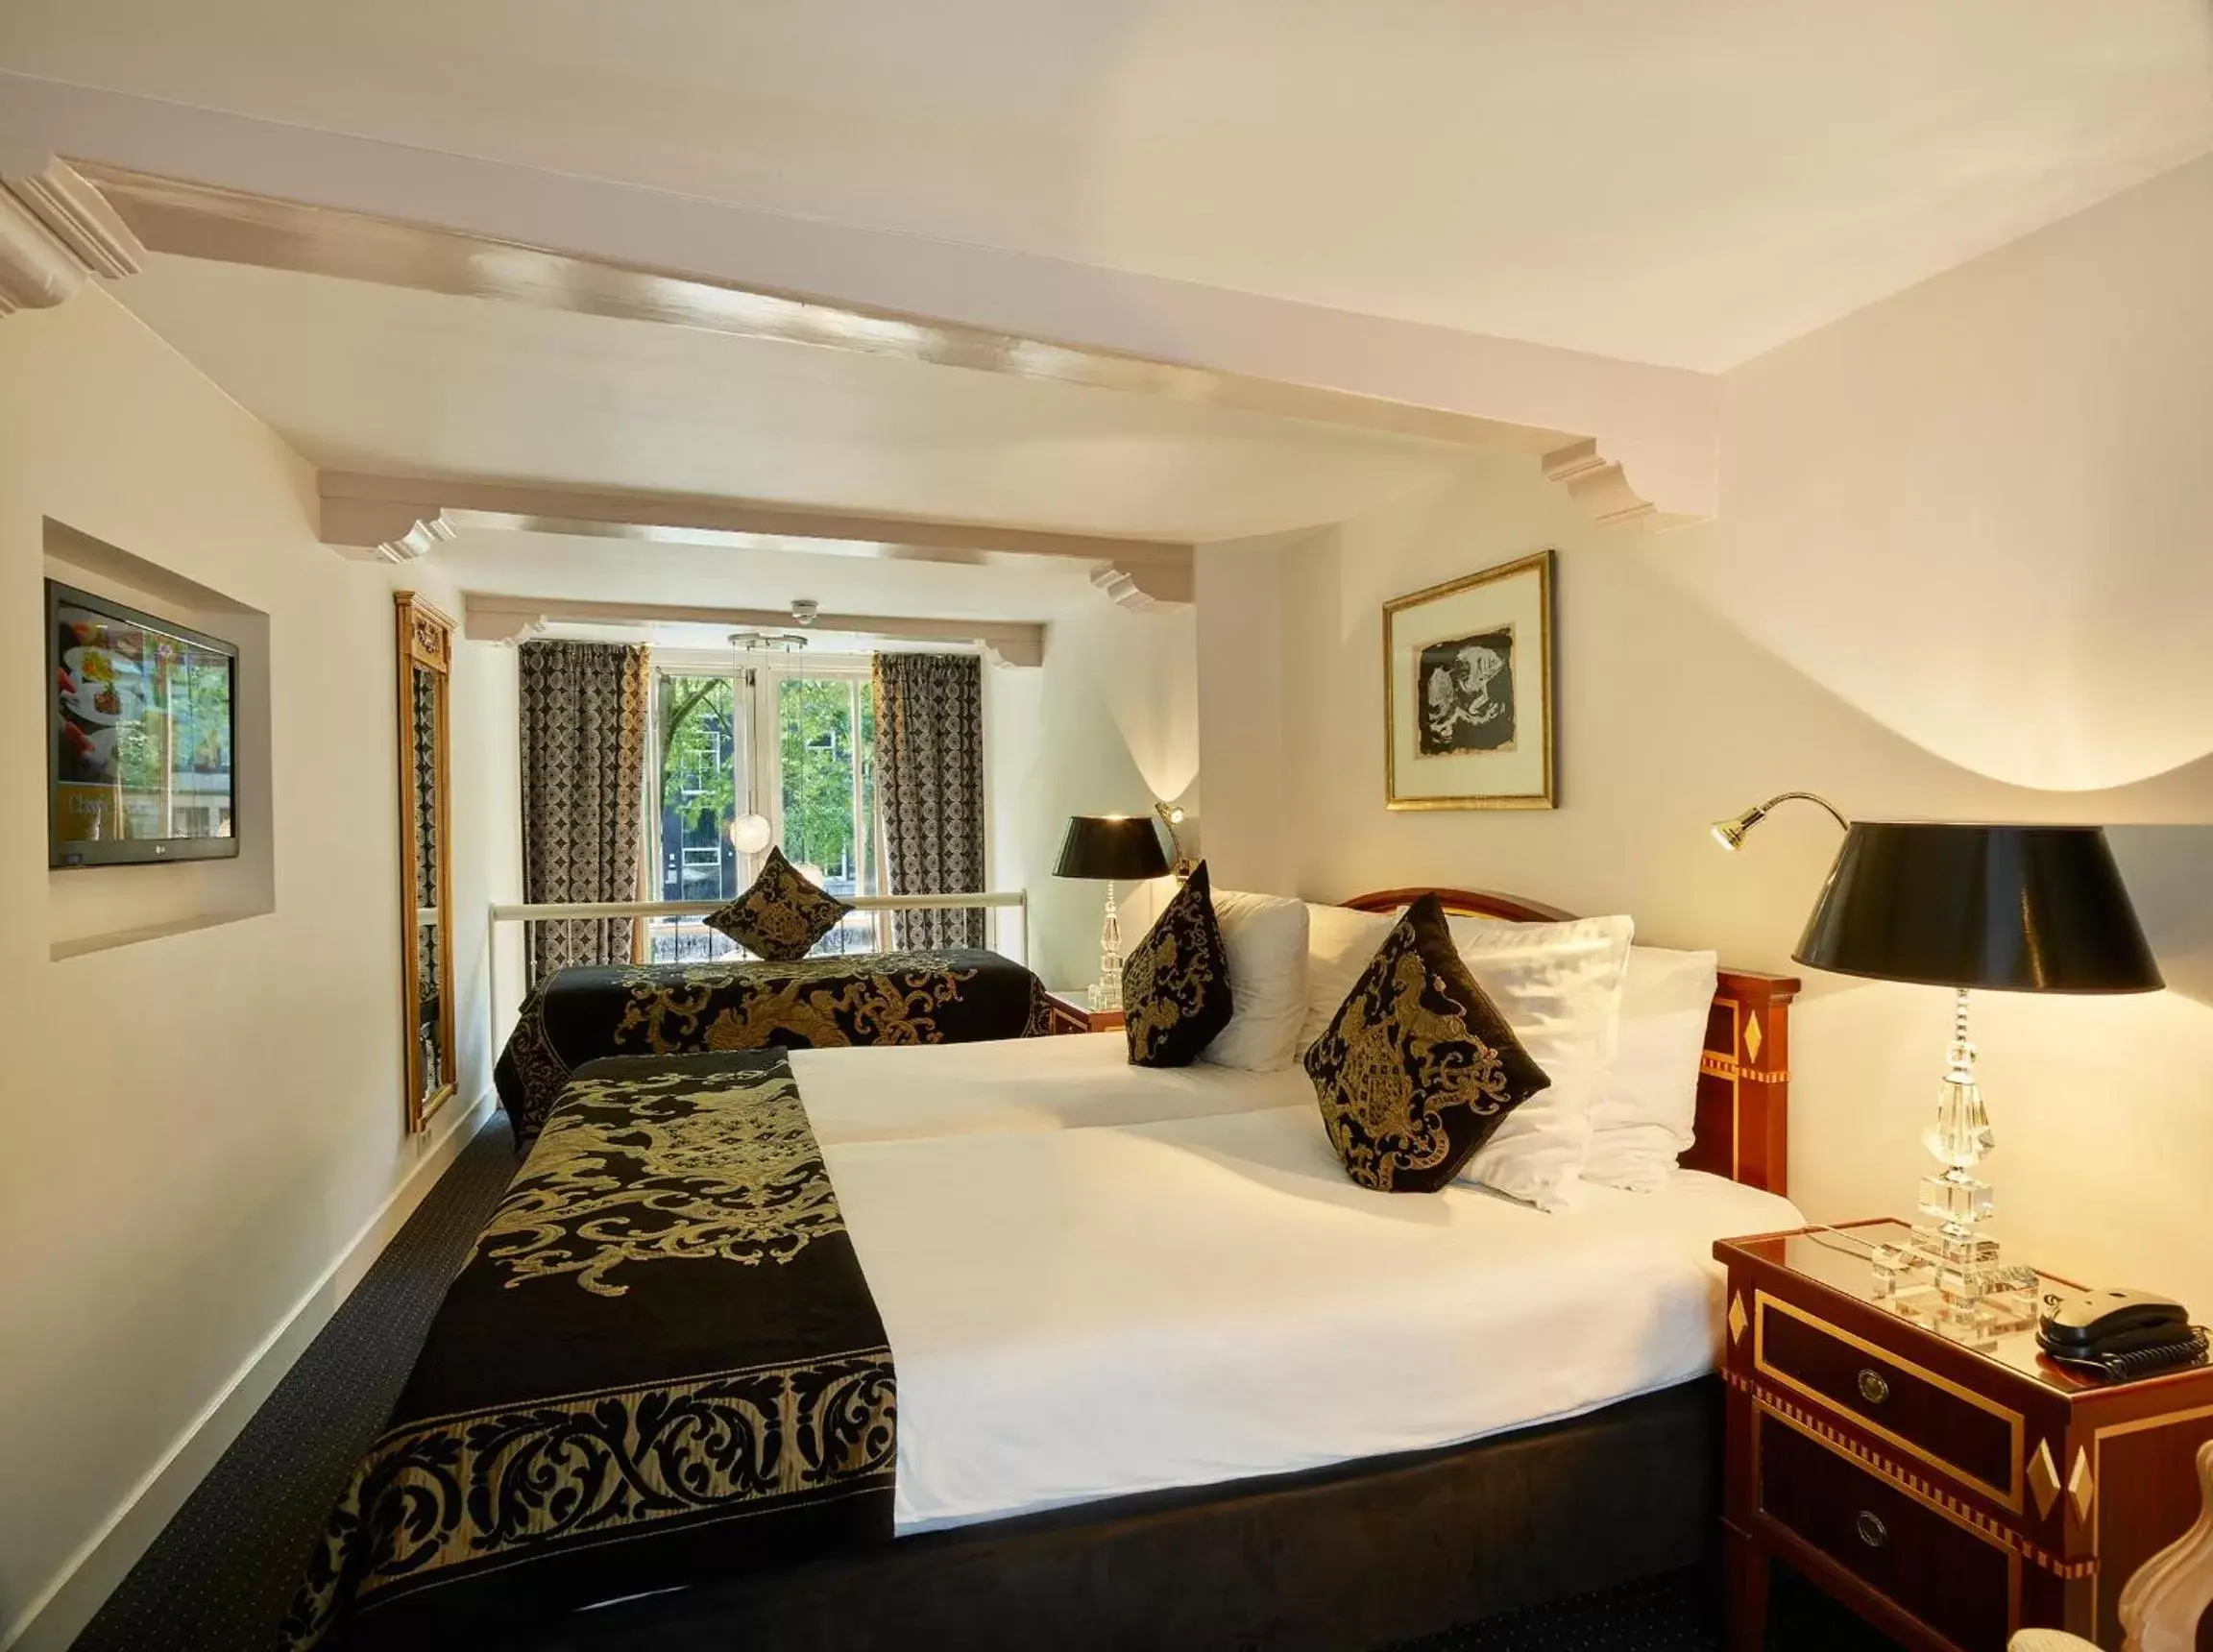 Bed, Room Photo in Ambassade Hotel